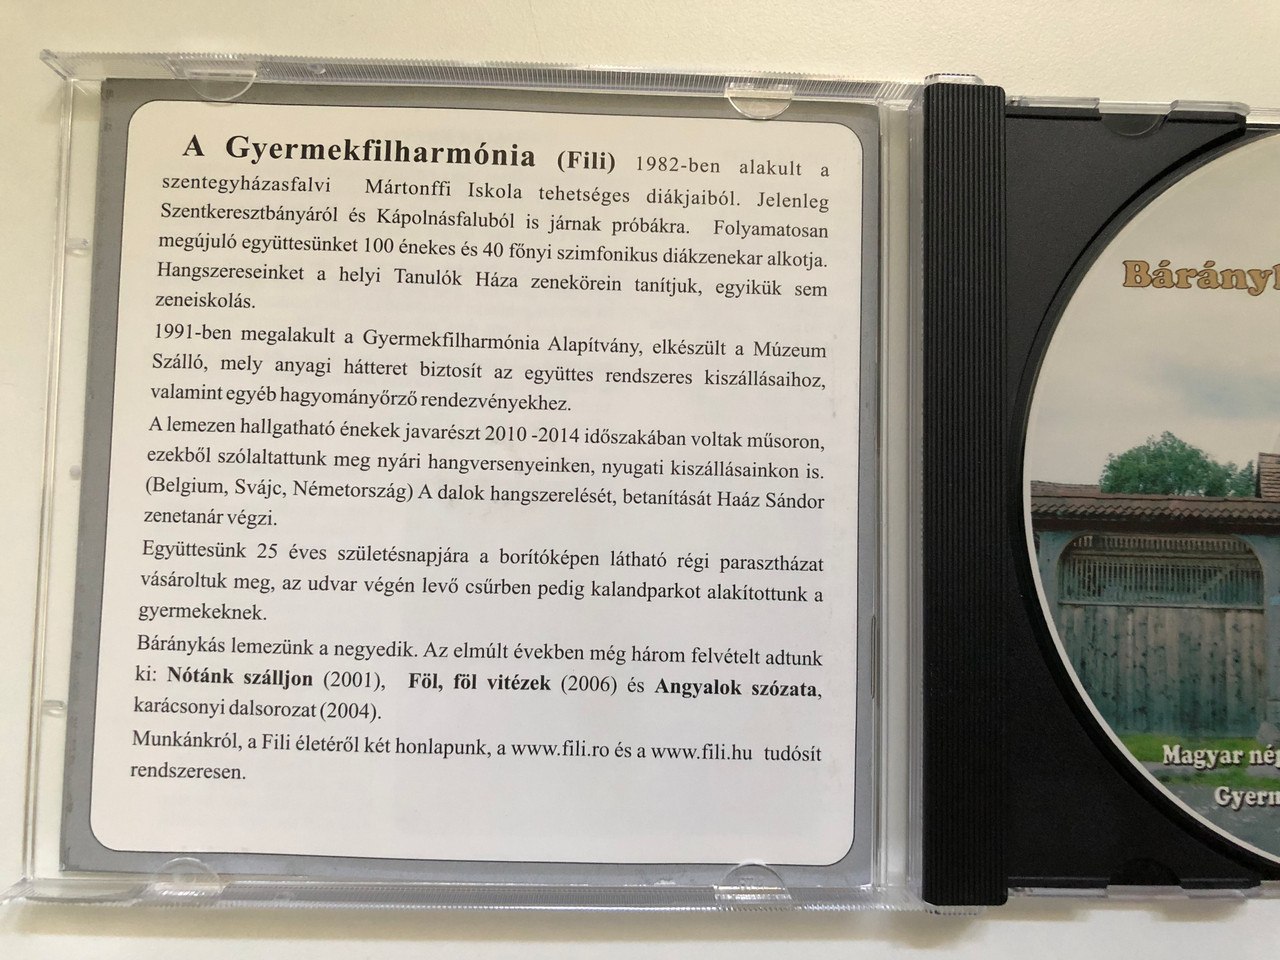 Baranykamon csengo szol - Magyar nepdalfeldolgozasok, mas nepek dalai  Gyermekfilharmonia, Szentegyhaza / Audio CD 2014 - bibleinmylanguage